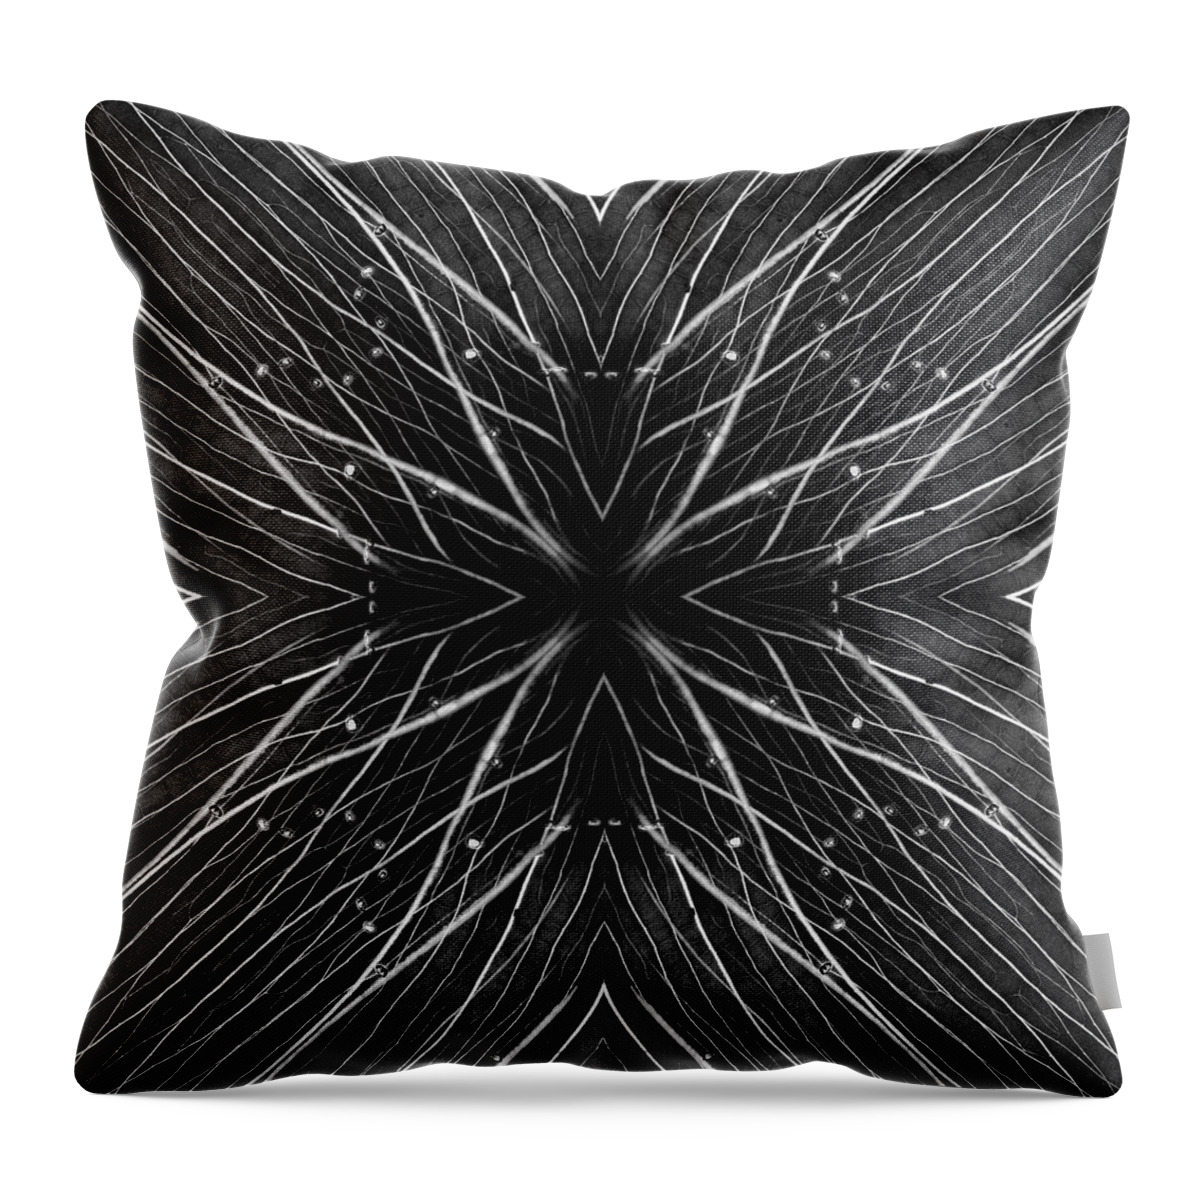 Kaleidoscope Throw Pillow featuring the photograph Kal4 by Morgan Wright